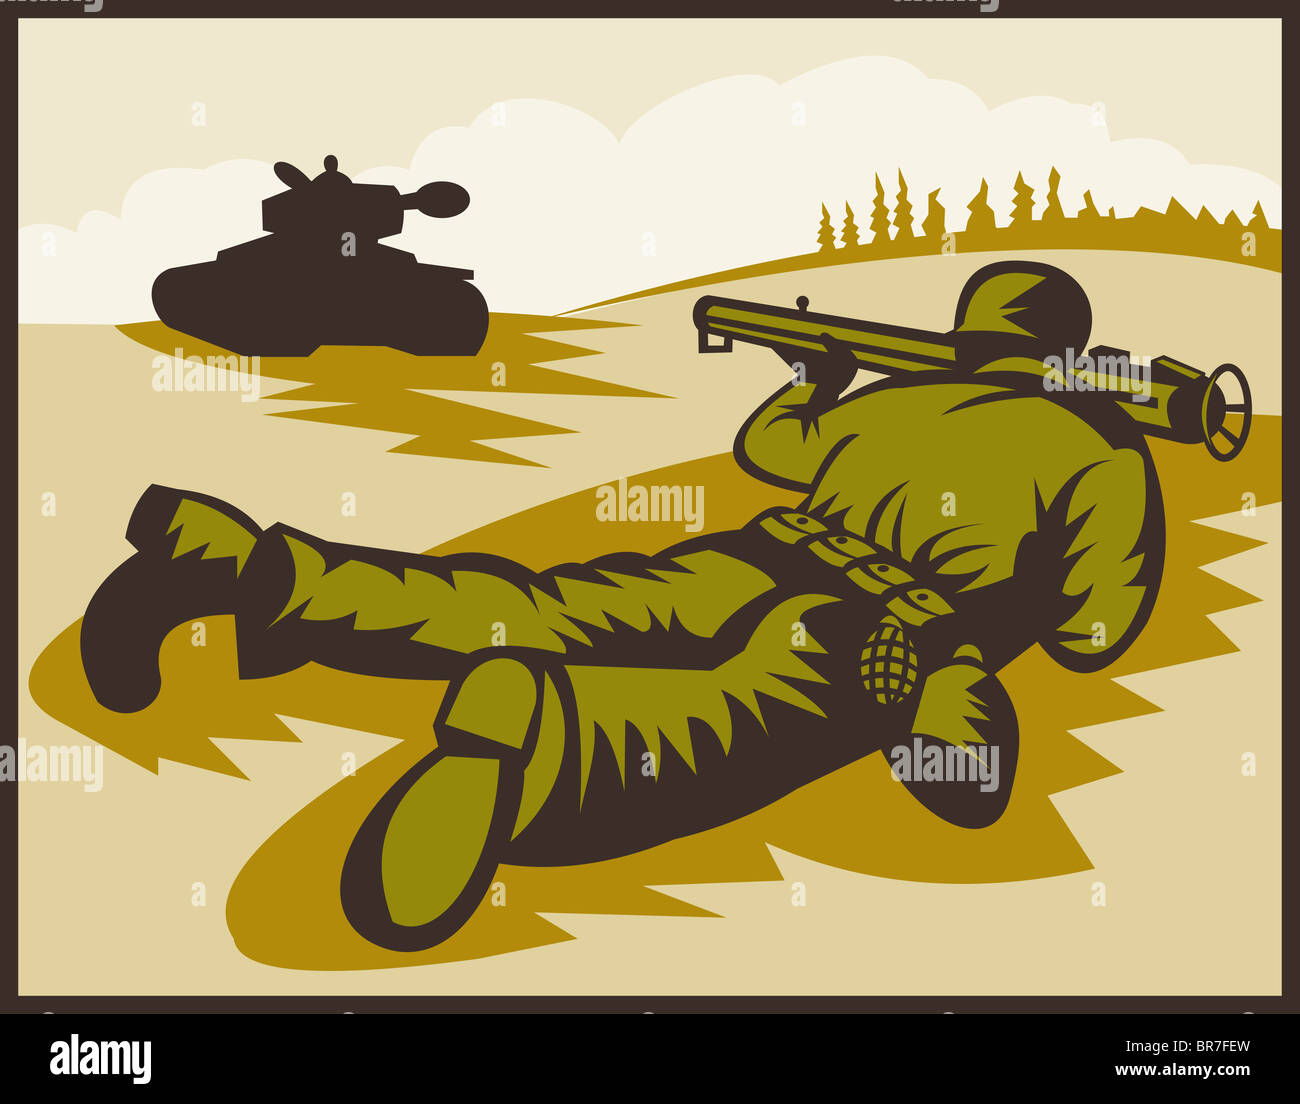 World two soldier aiming bazooka at battle tank retro style illustration Stock Photo